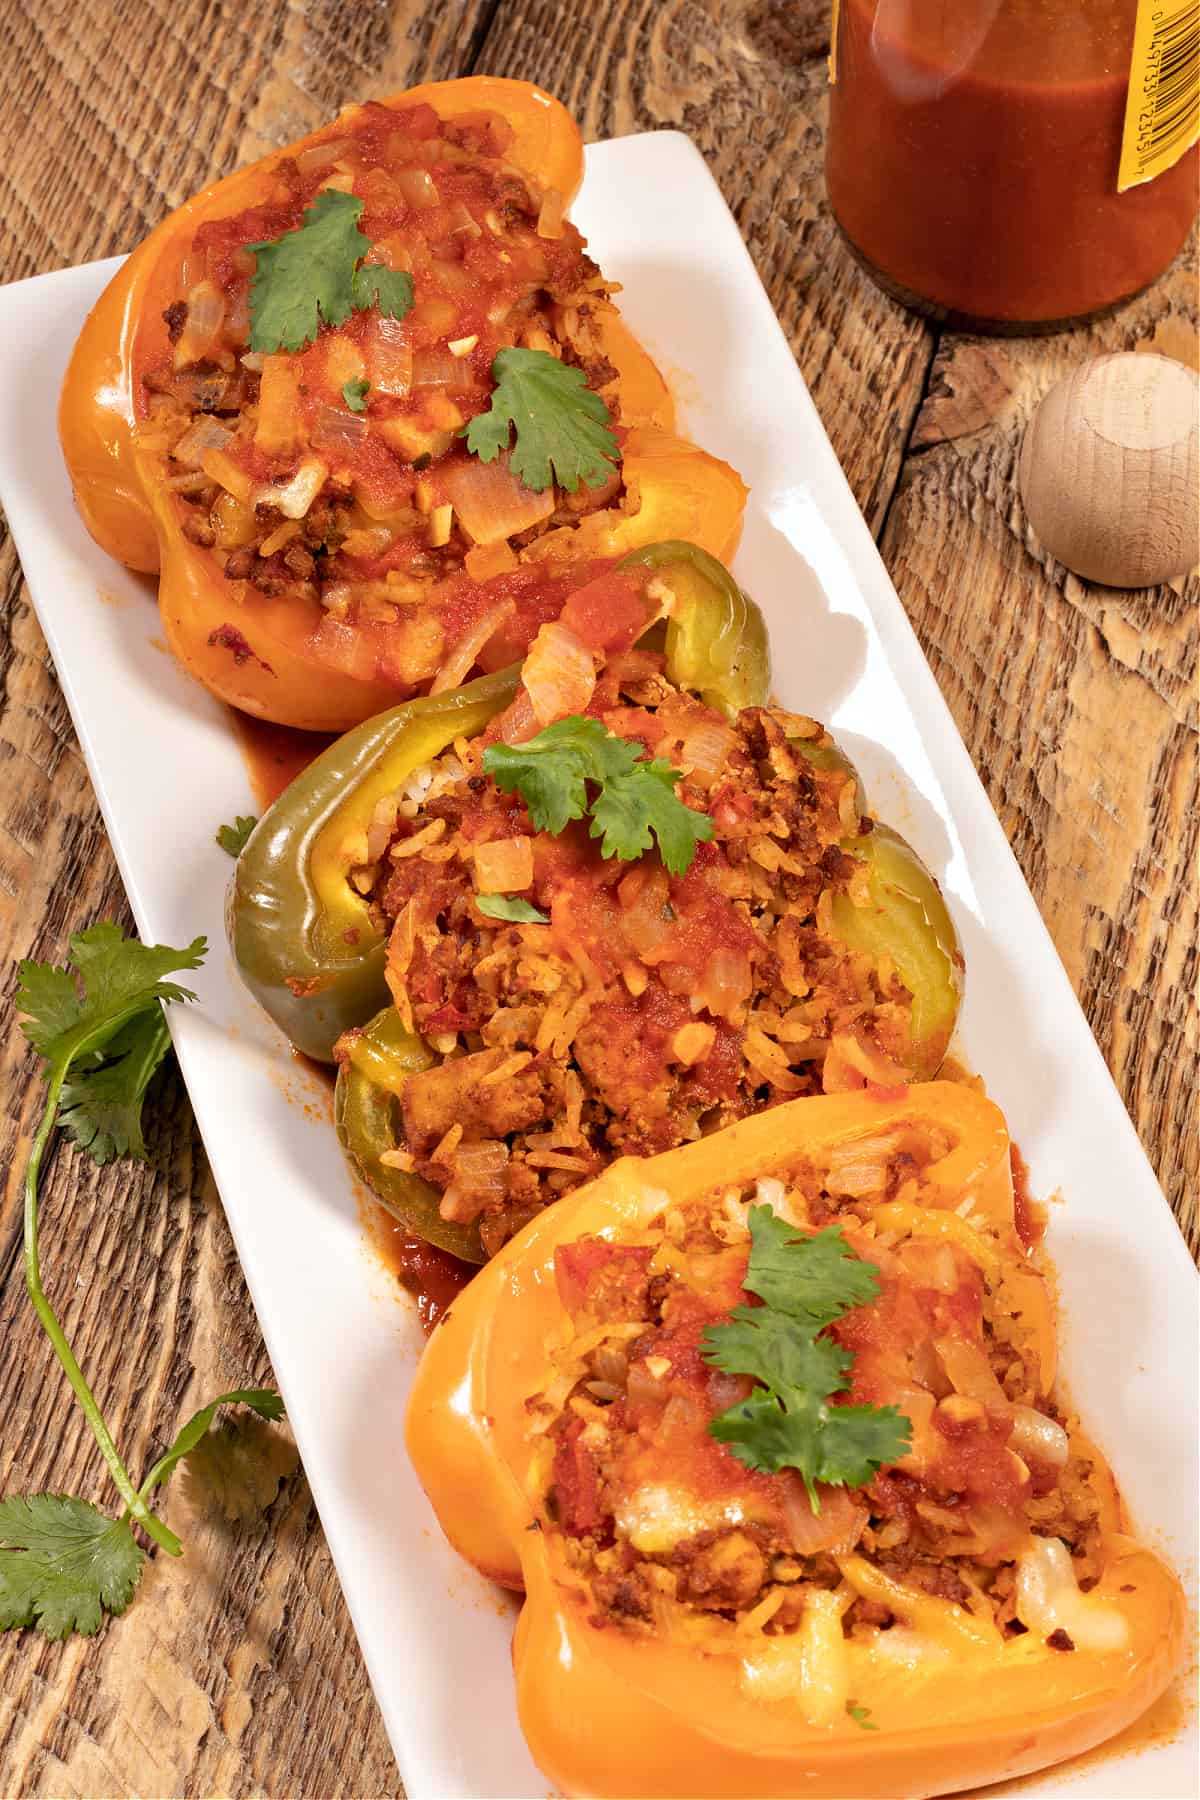 vegan stuffed bell peppers